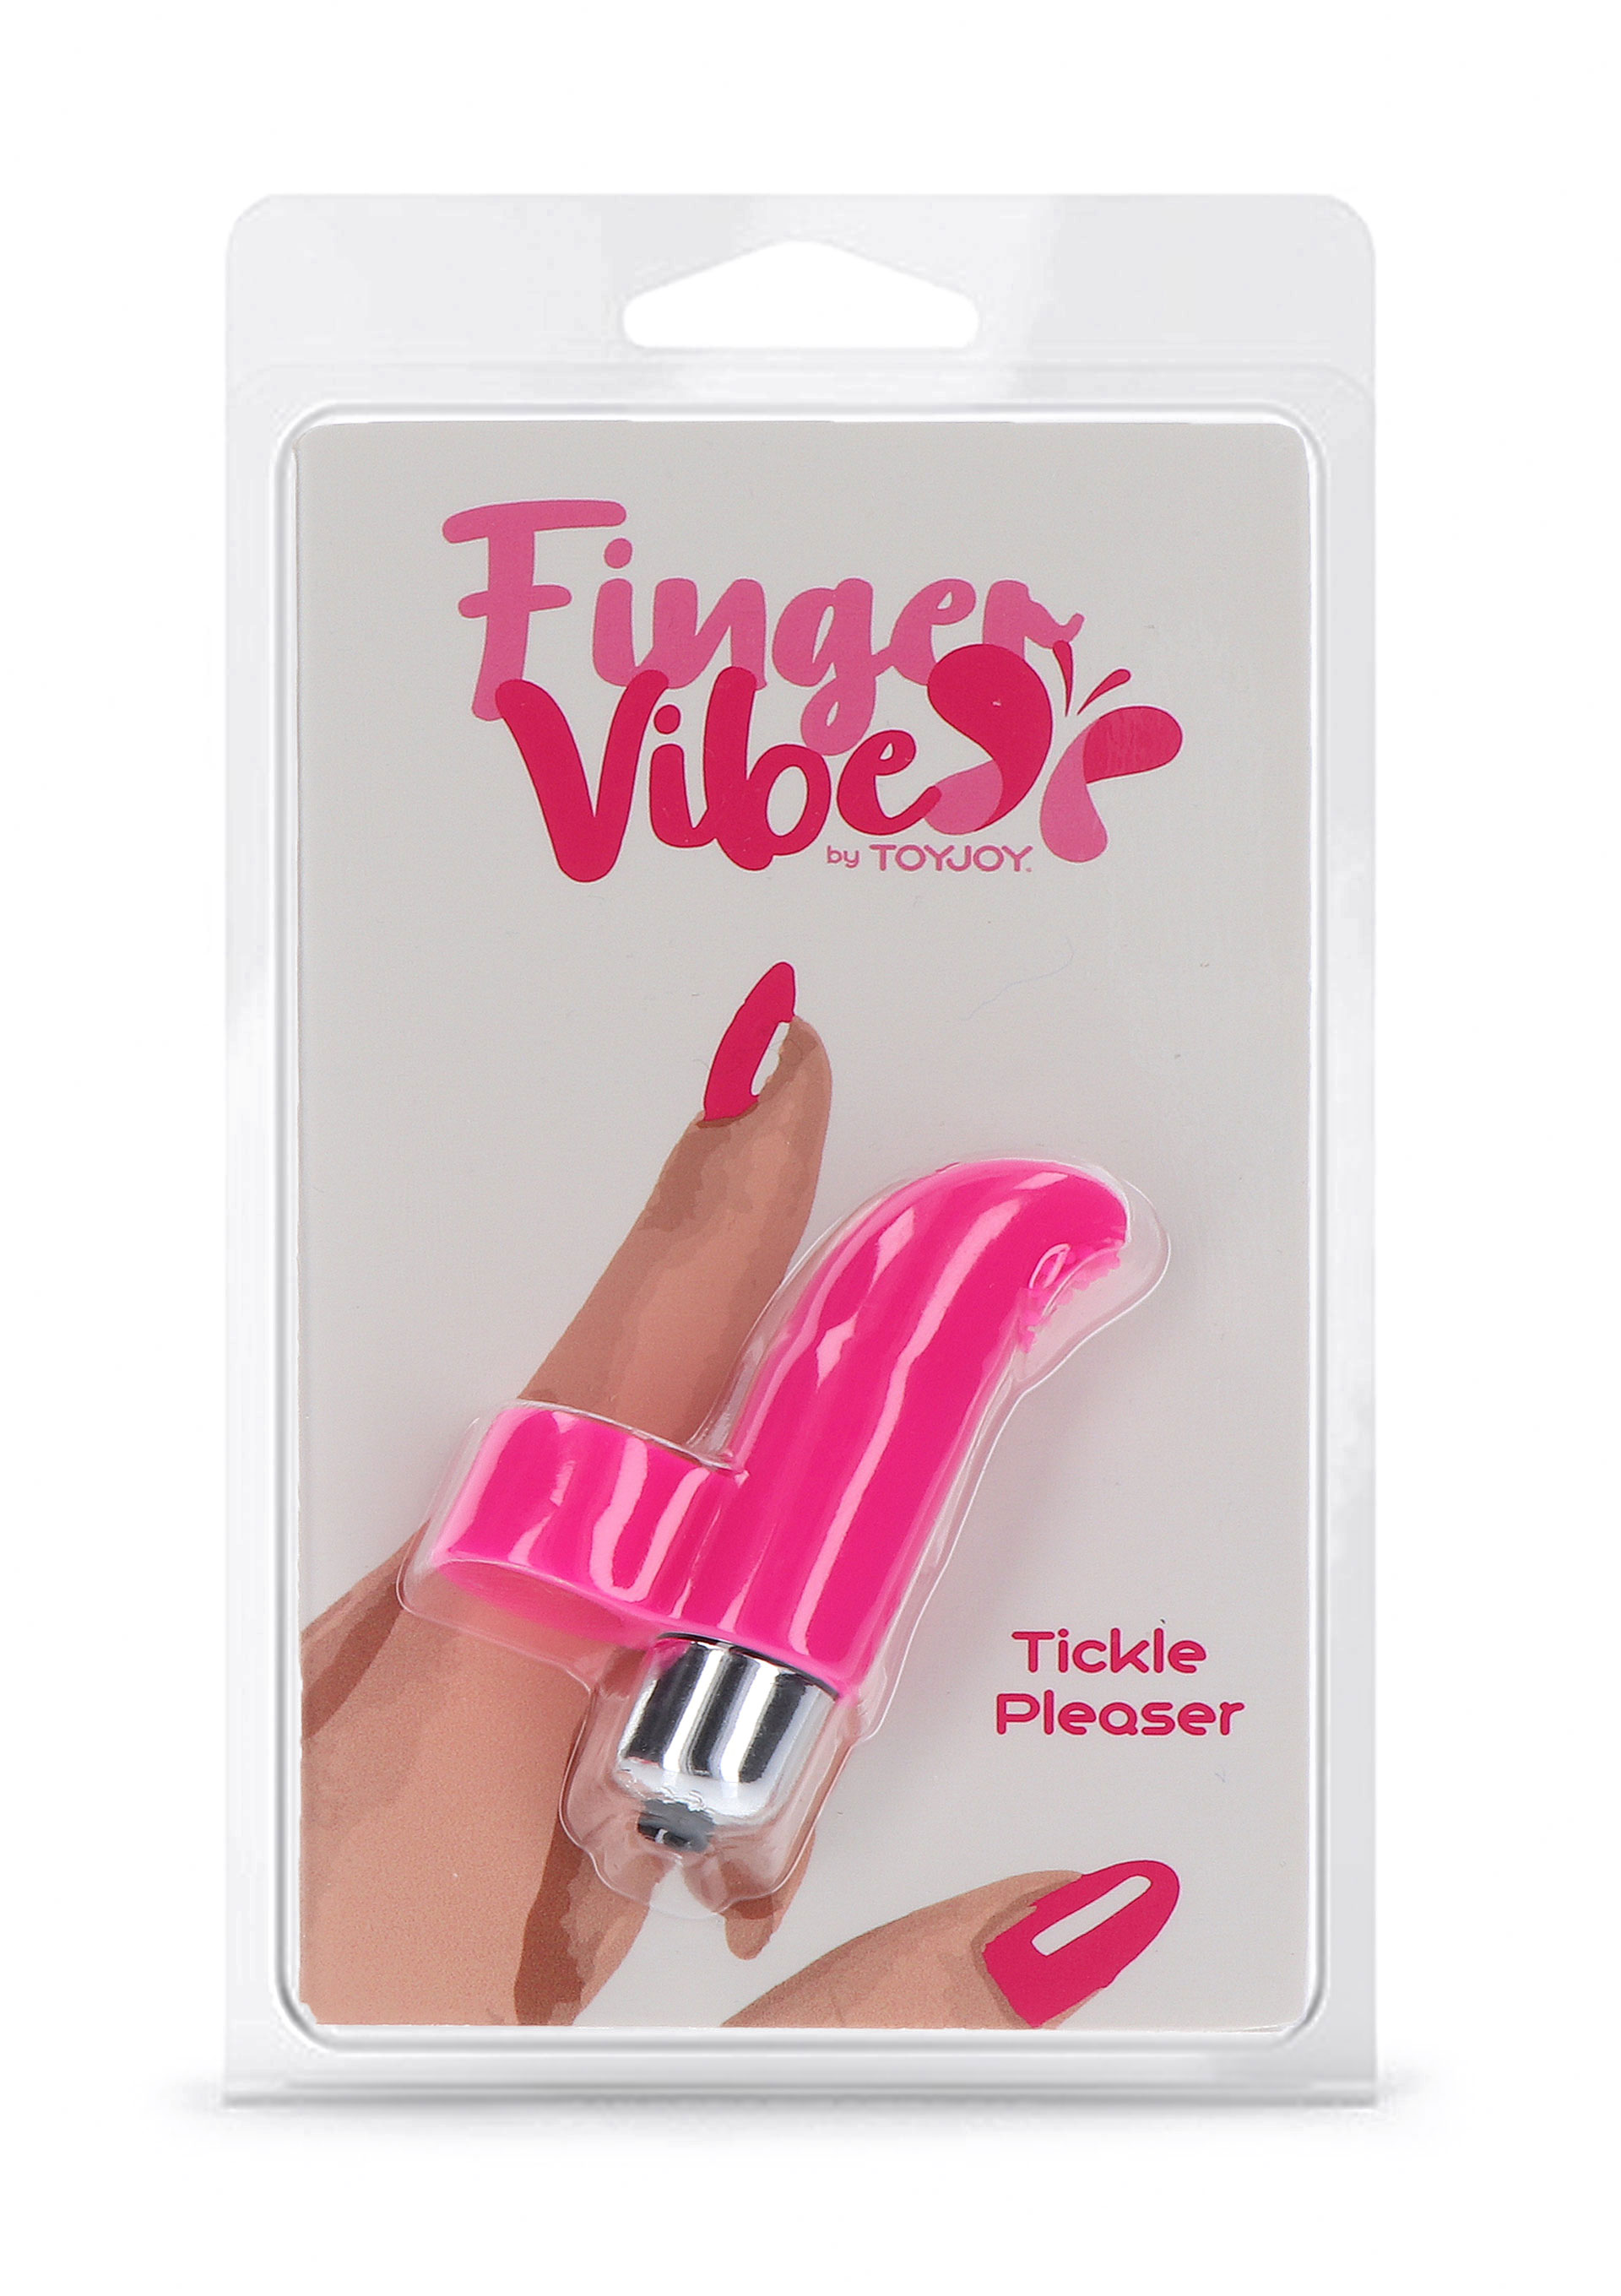 ToyJoy Fingervibes - Tickle Pleaser